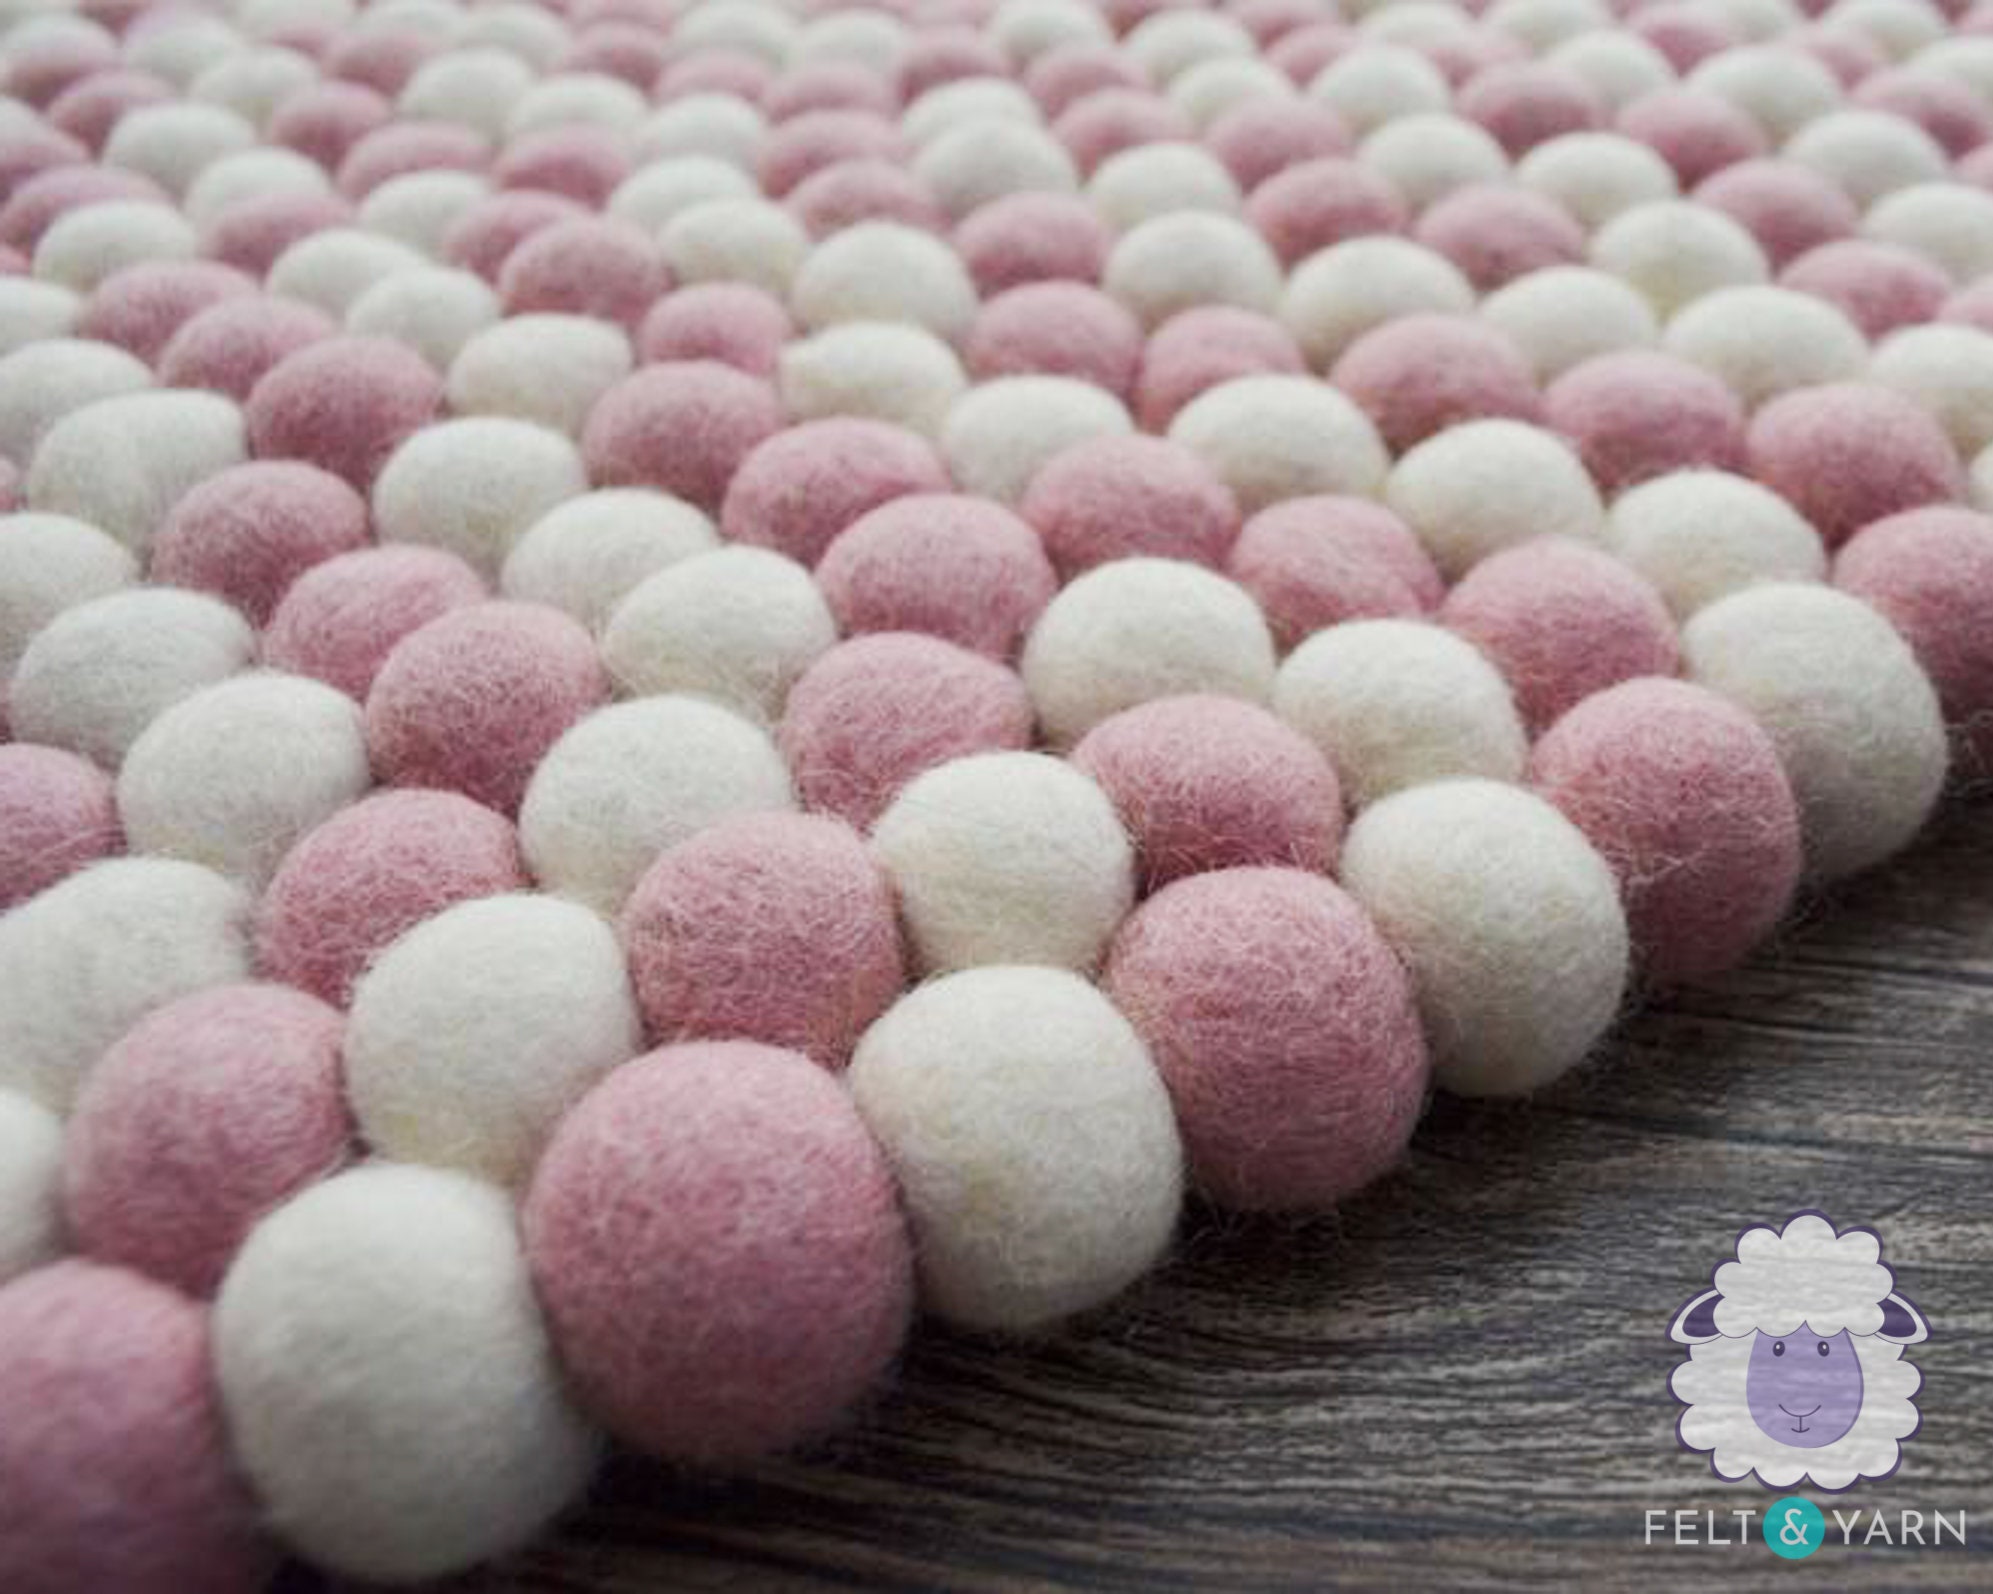 40cm Pink & White Wool Felt Ball Rug Hand Felted Round, Rectangular Carpet To Decor Room Rugs Fair Trade & Ethically Handmade